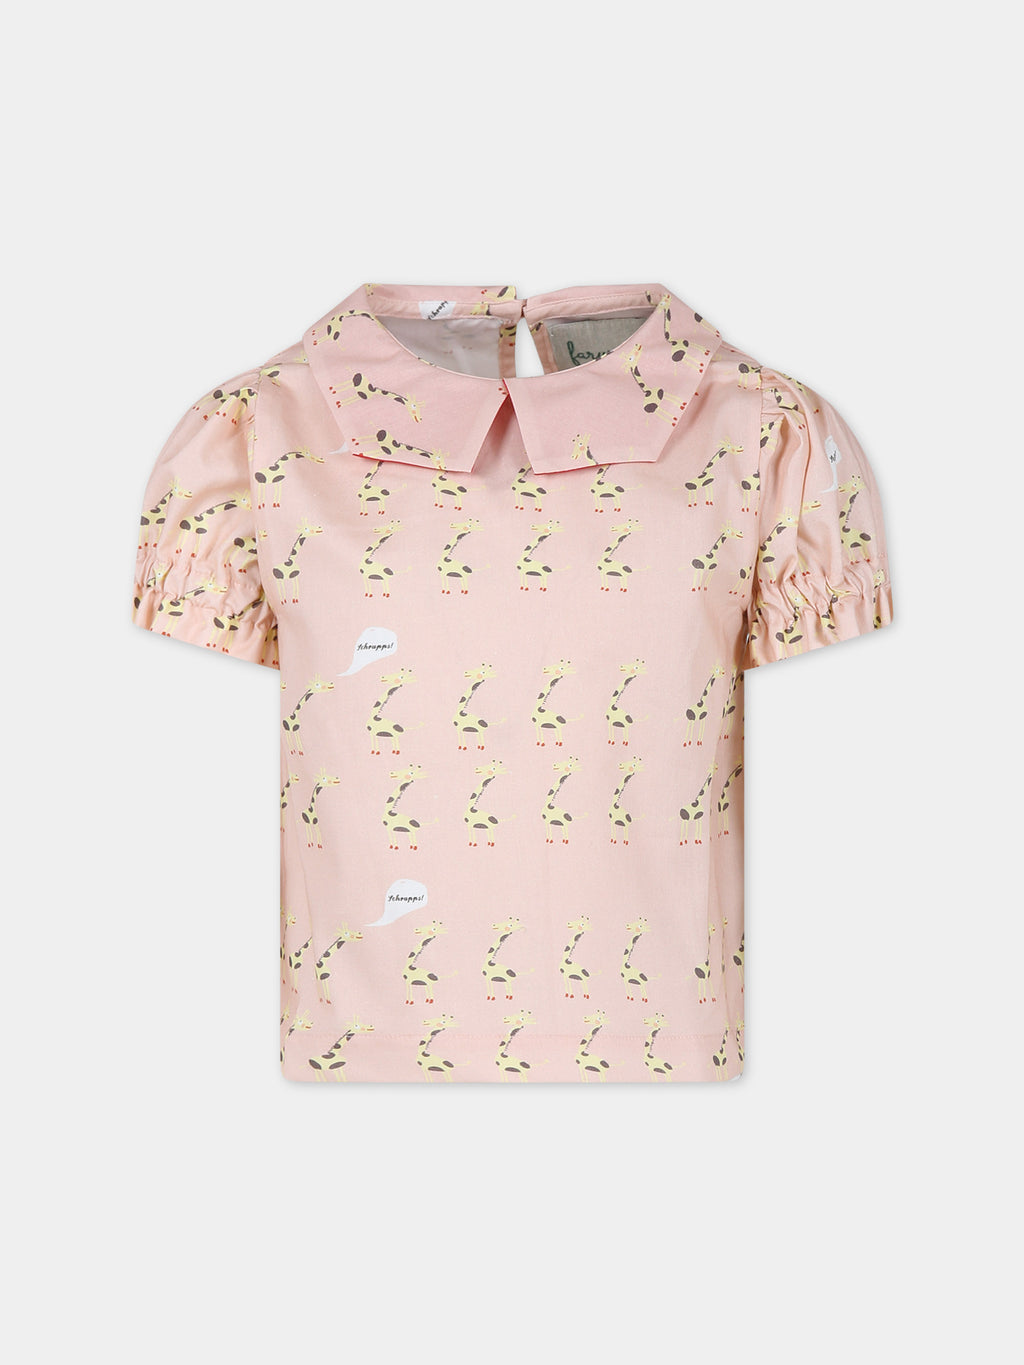 Camicia rosa per bambina con giraffe